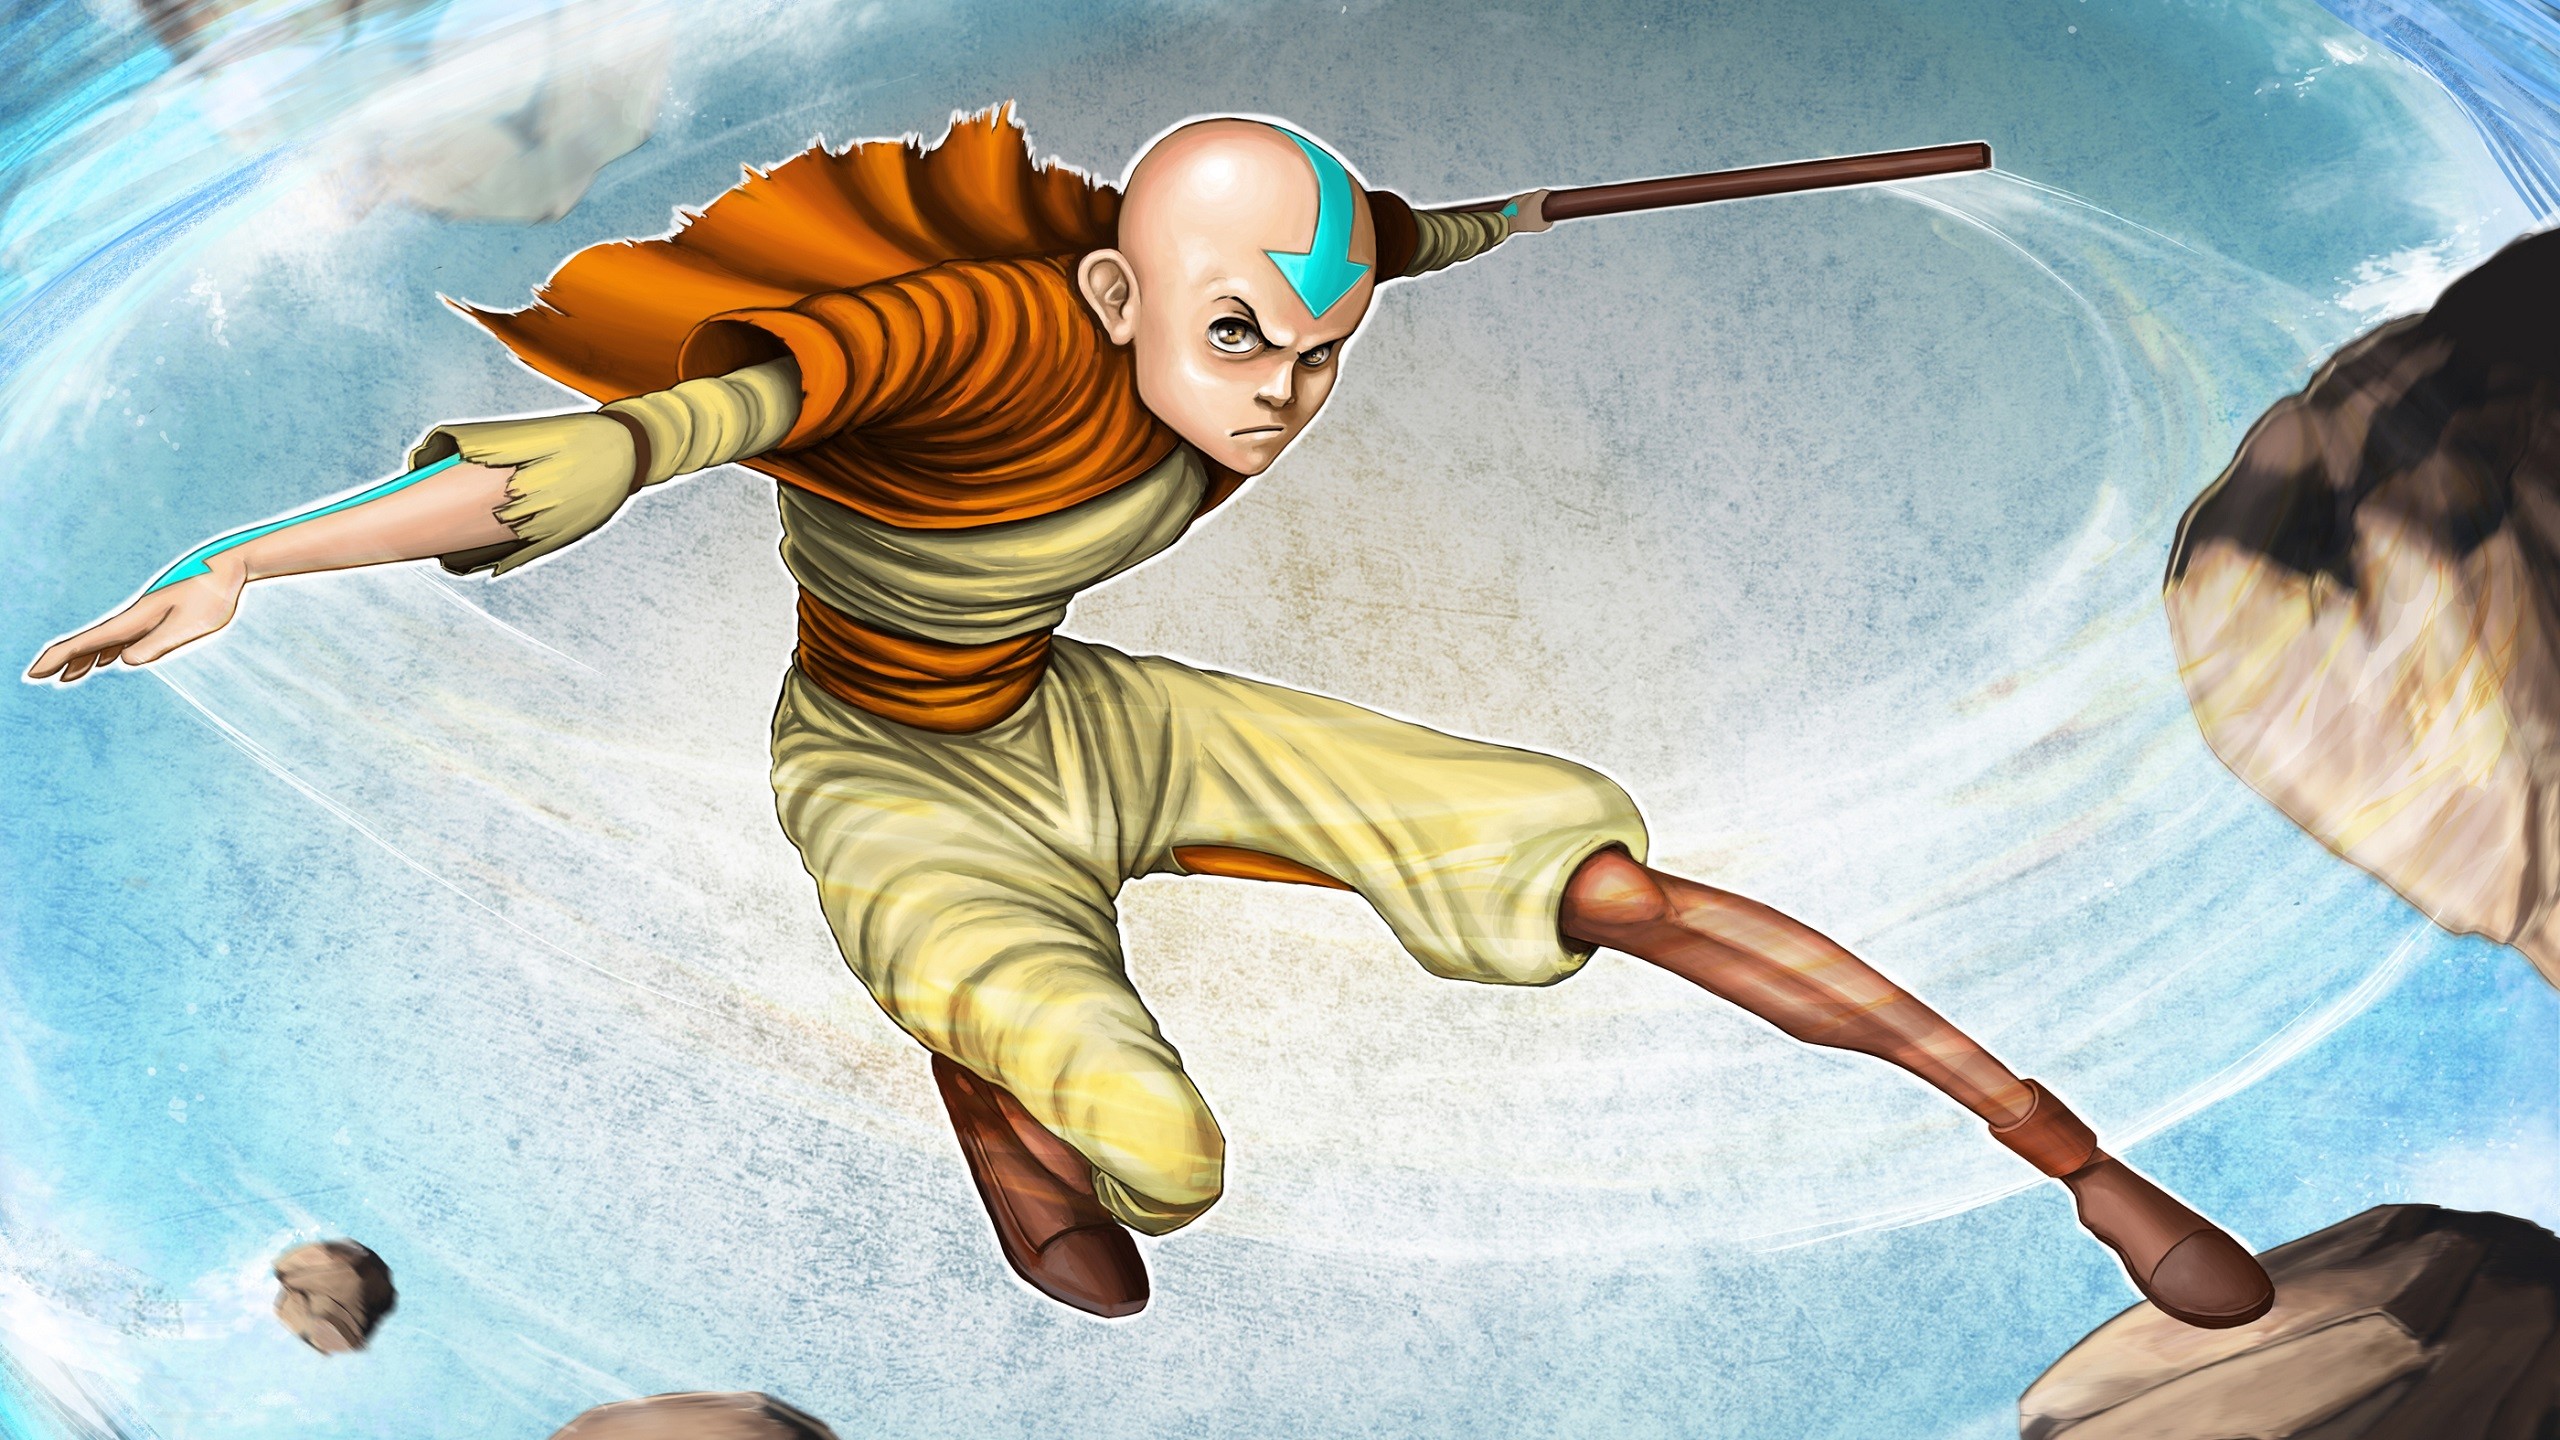 General 2560x1440 Avatar Avatar: The Last Airbender Aang TV series digital art